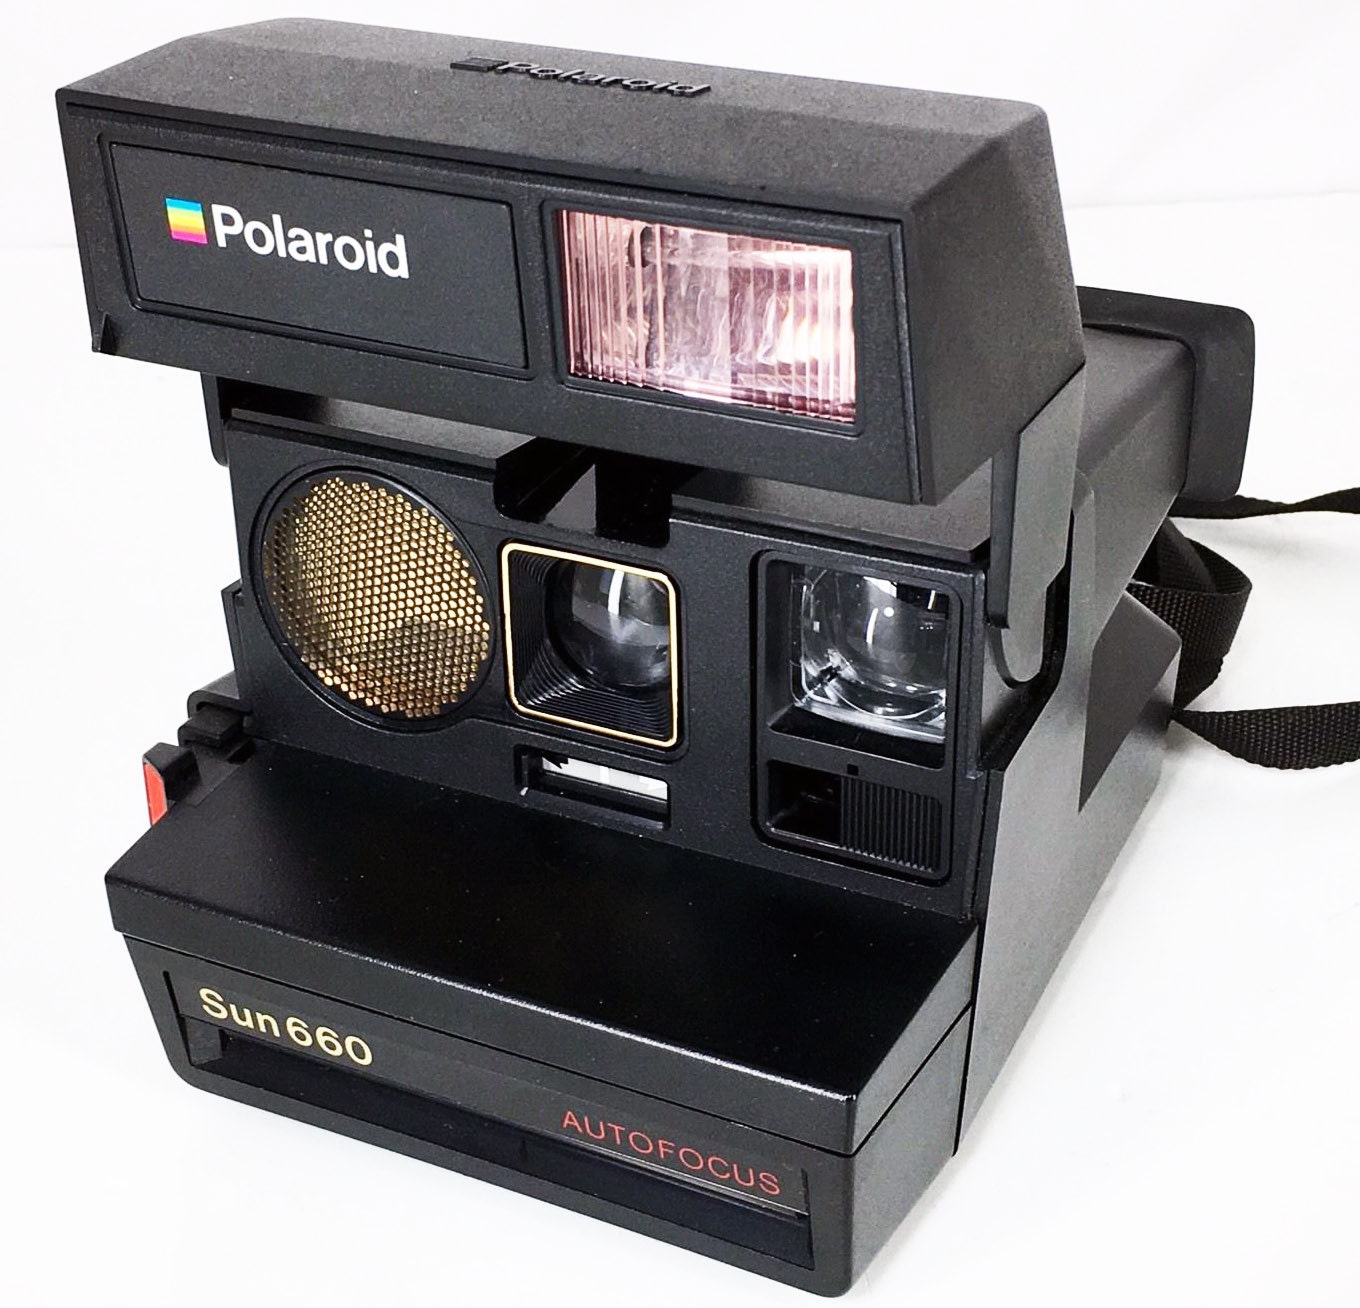 Polaroid Sun 660 Af Auto Focus Instant Film Camera Tested